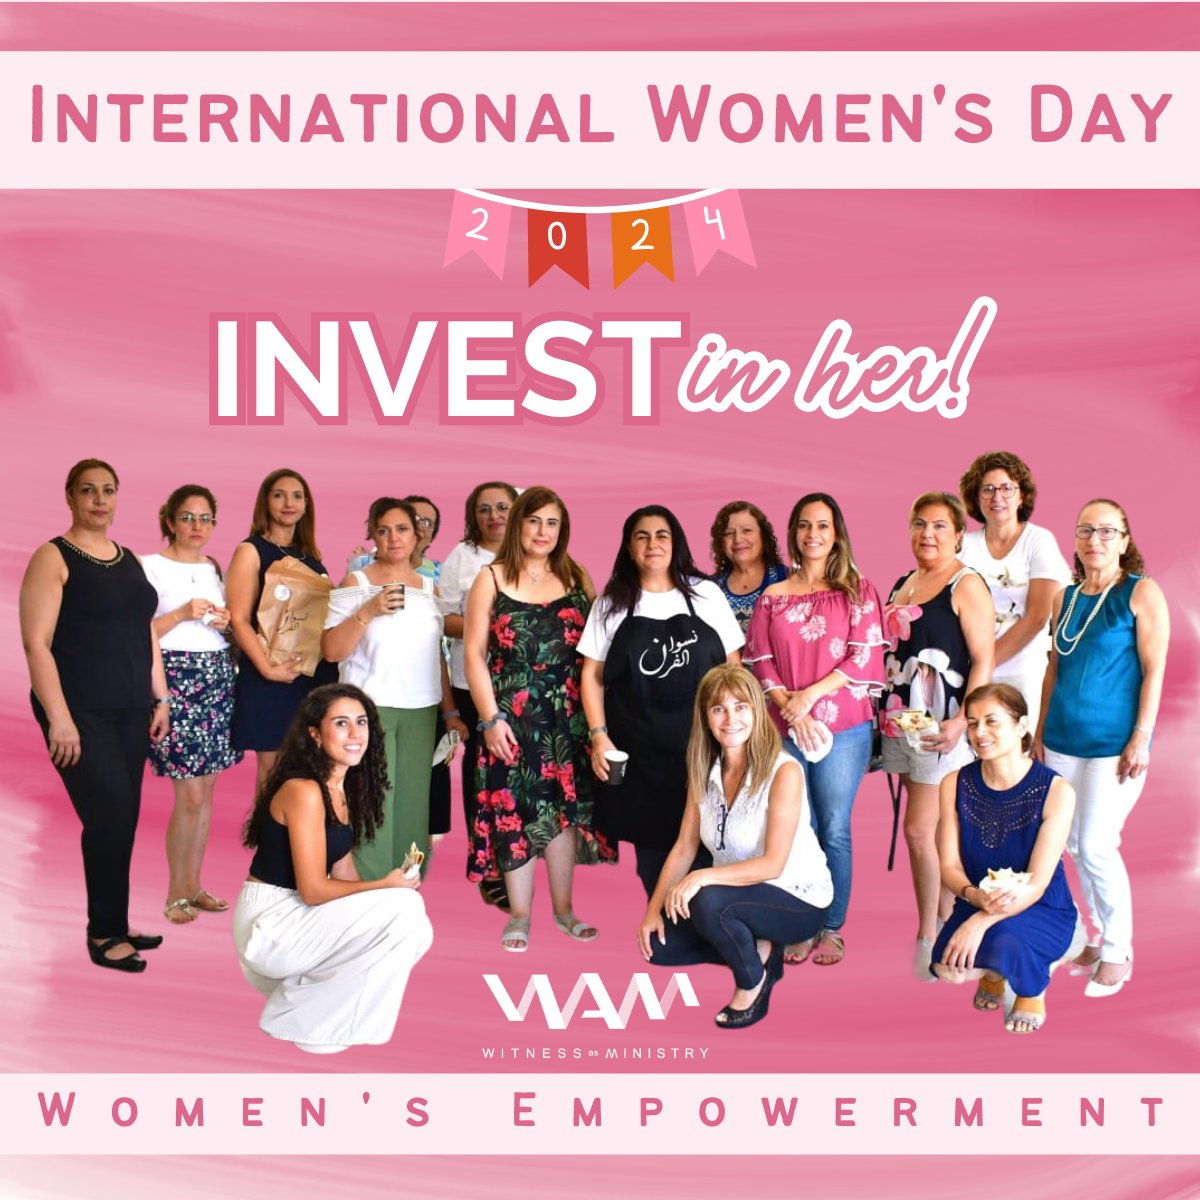 #WAMcares about empowering women!
#womensempowerment
#selfdetermination
#helpushelpher
#microenterprise 
#entrepreneurship 
#HERstory